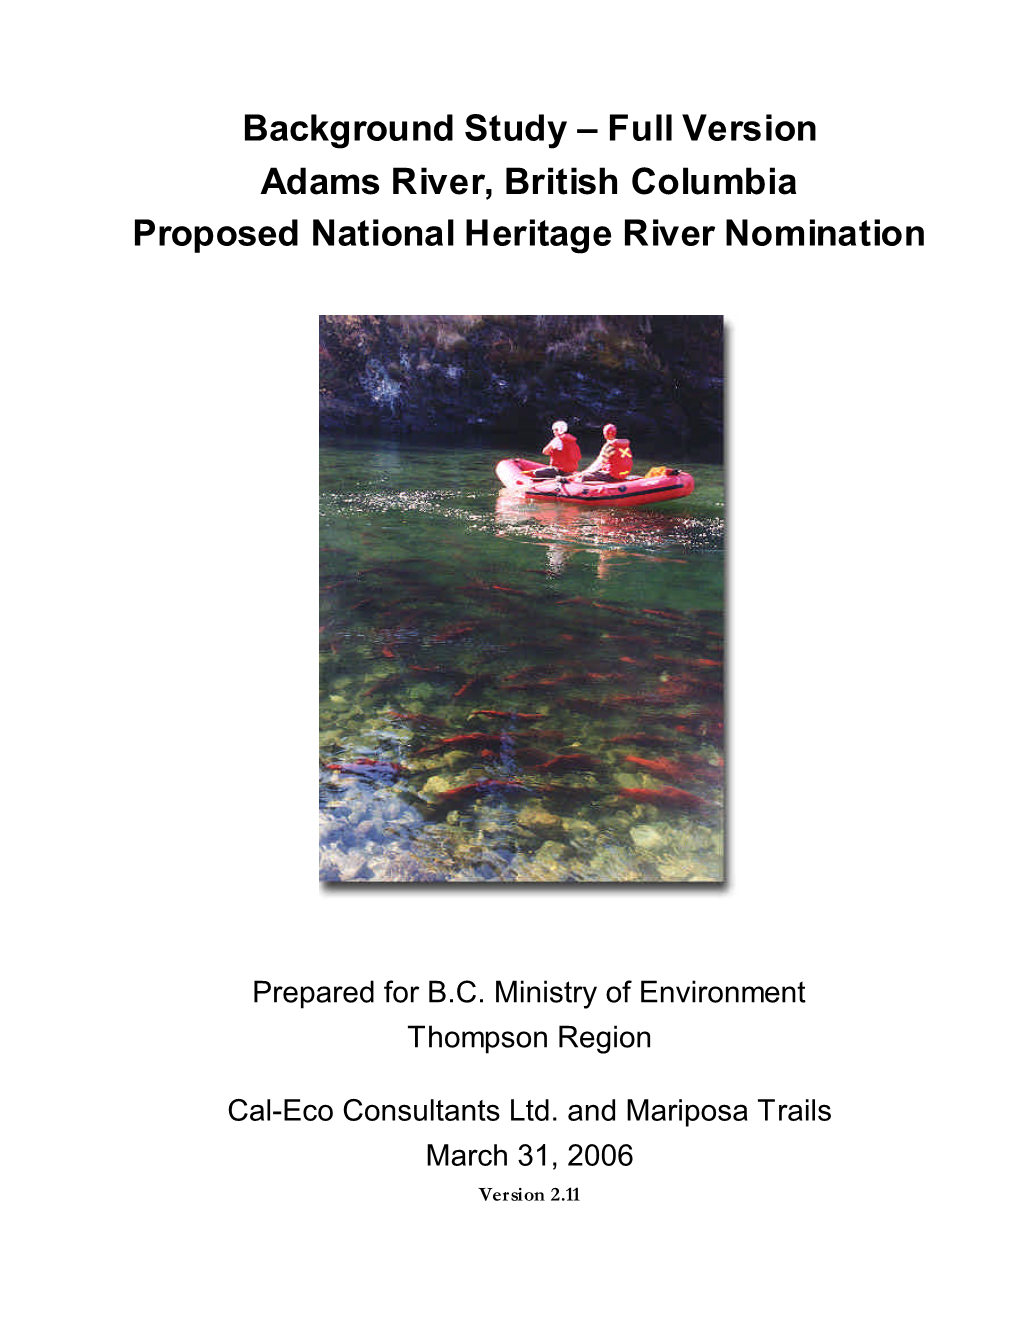 Adams River, British Columbia Proposed National Heritage River Nomination